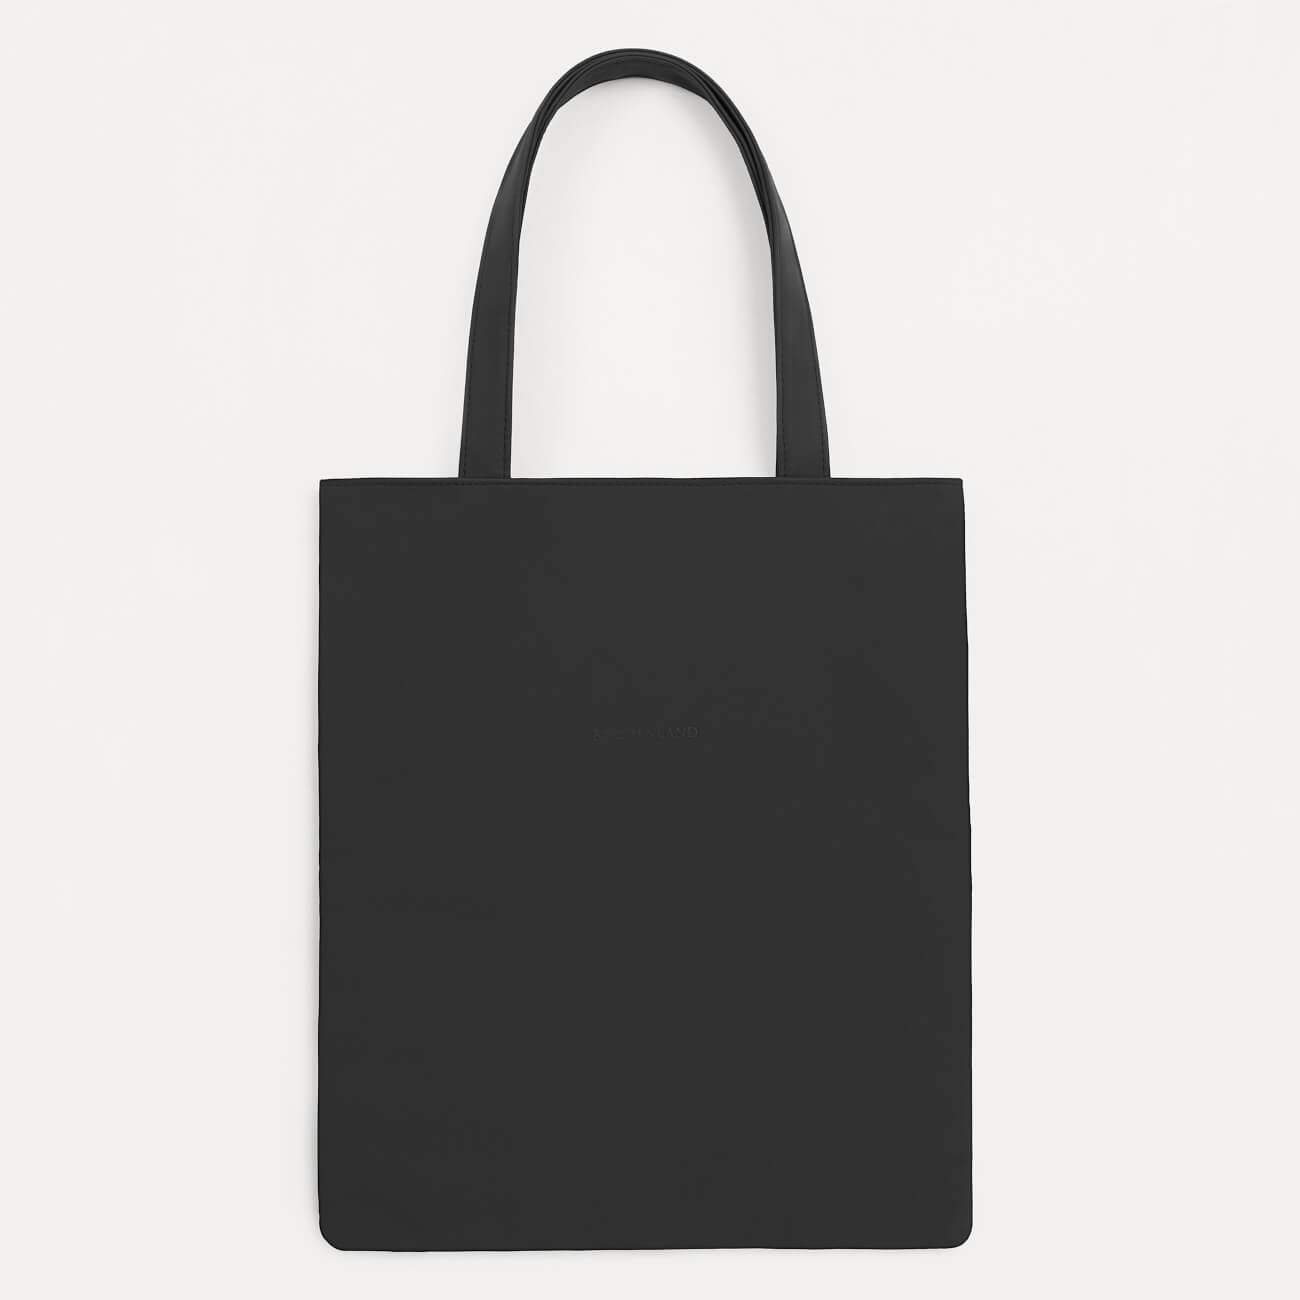 сумка klondike native черная kd1130 01 Сумка-шоппер, 37х32 см, полиуретан, черная, Krast